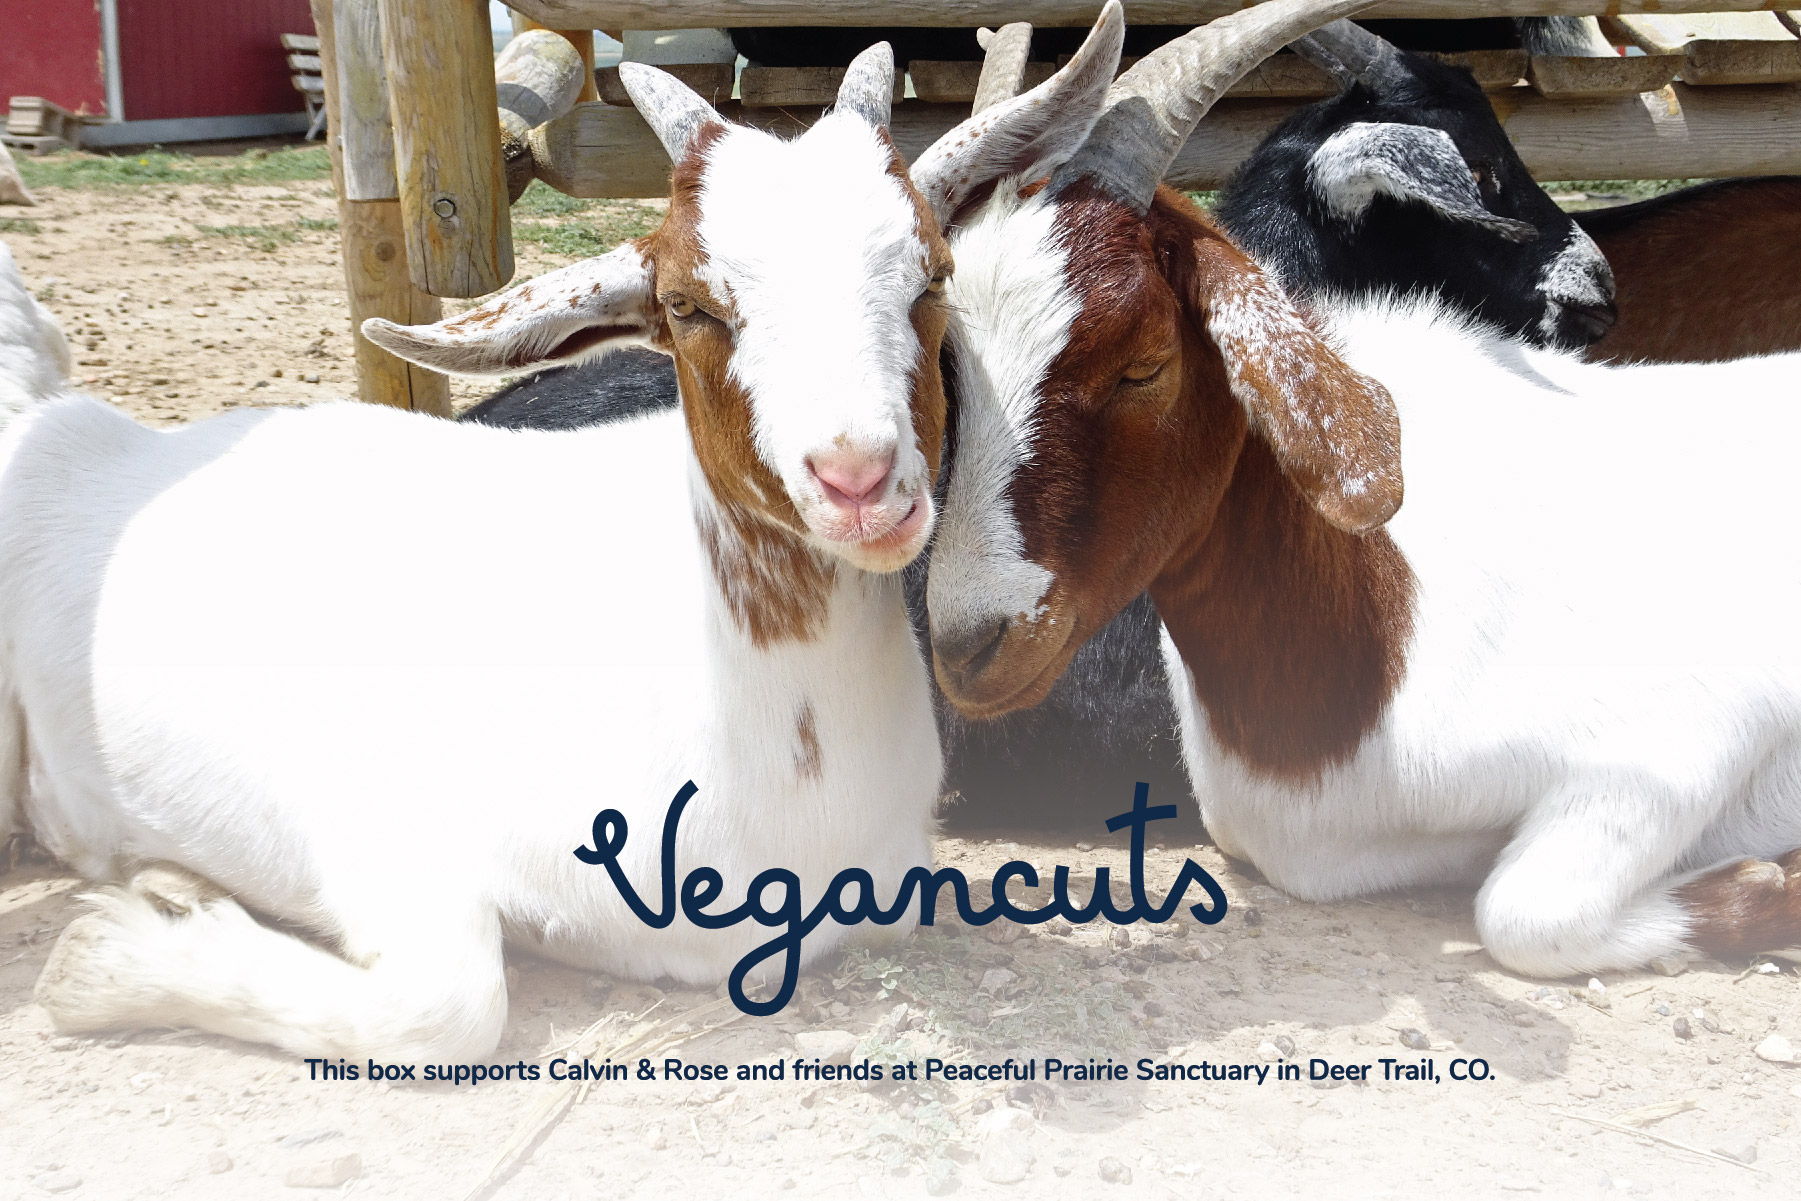   Calvin & Rose & Friends at Peaceful Prairie Sanctuary | Vegancuts Donation Program